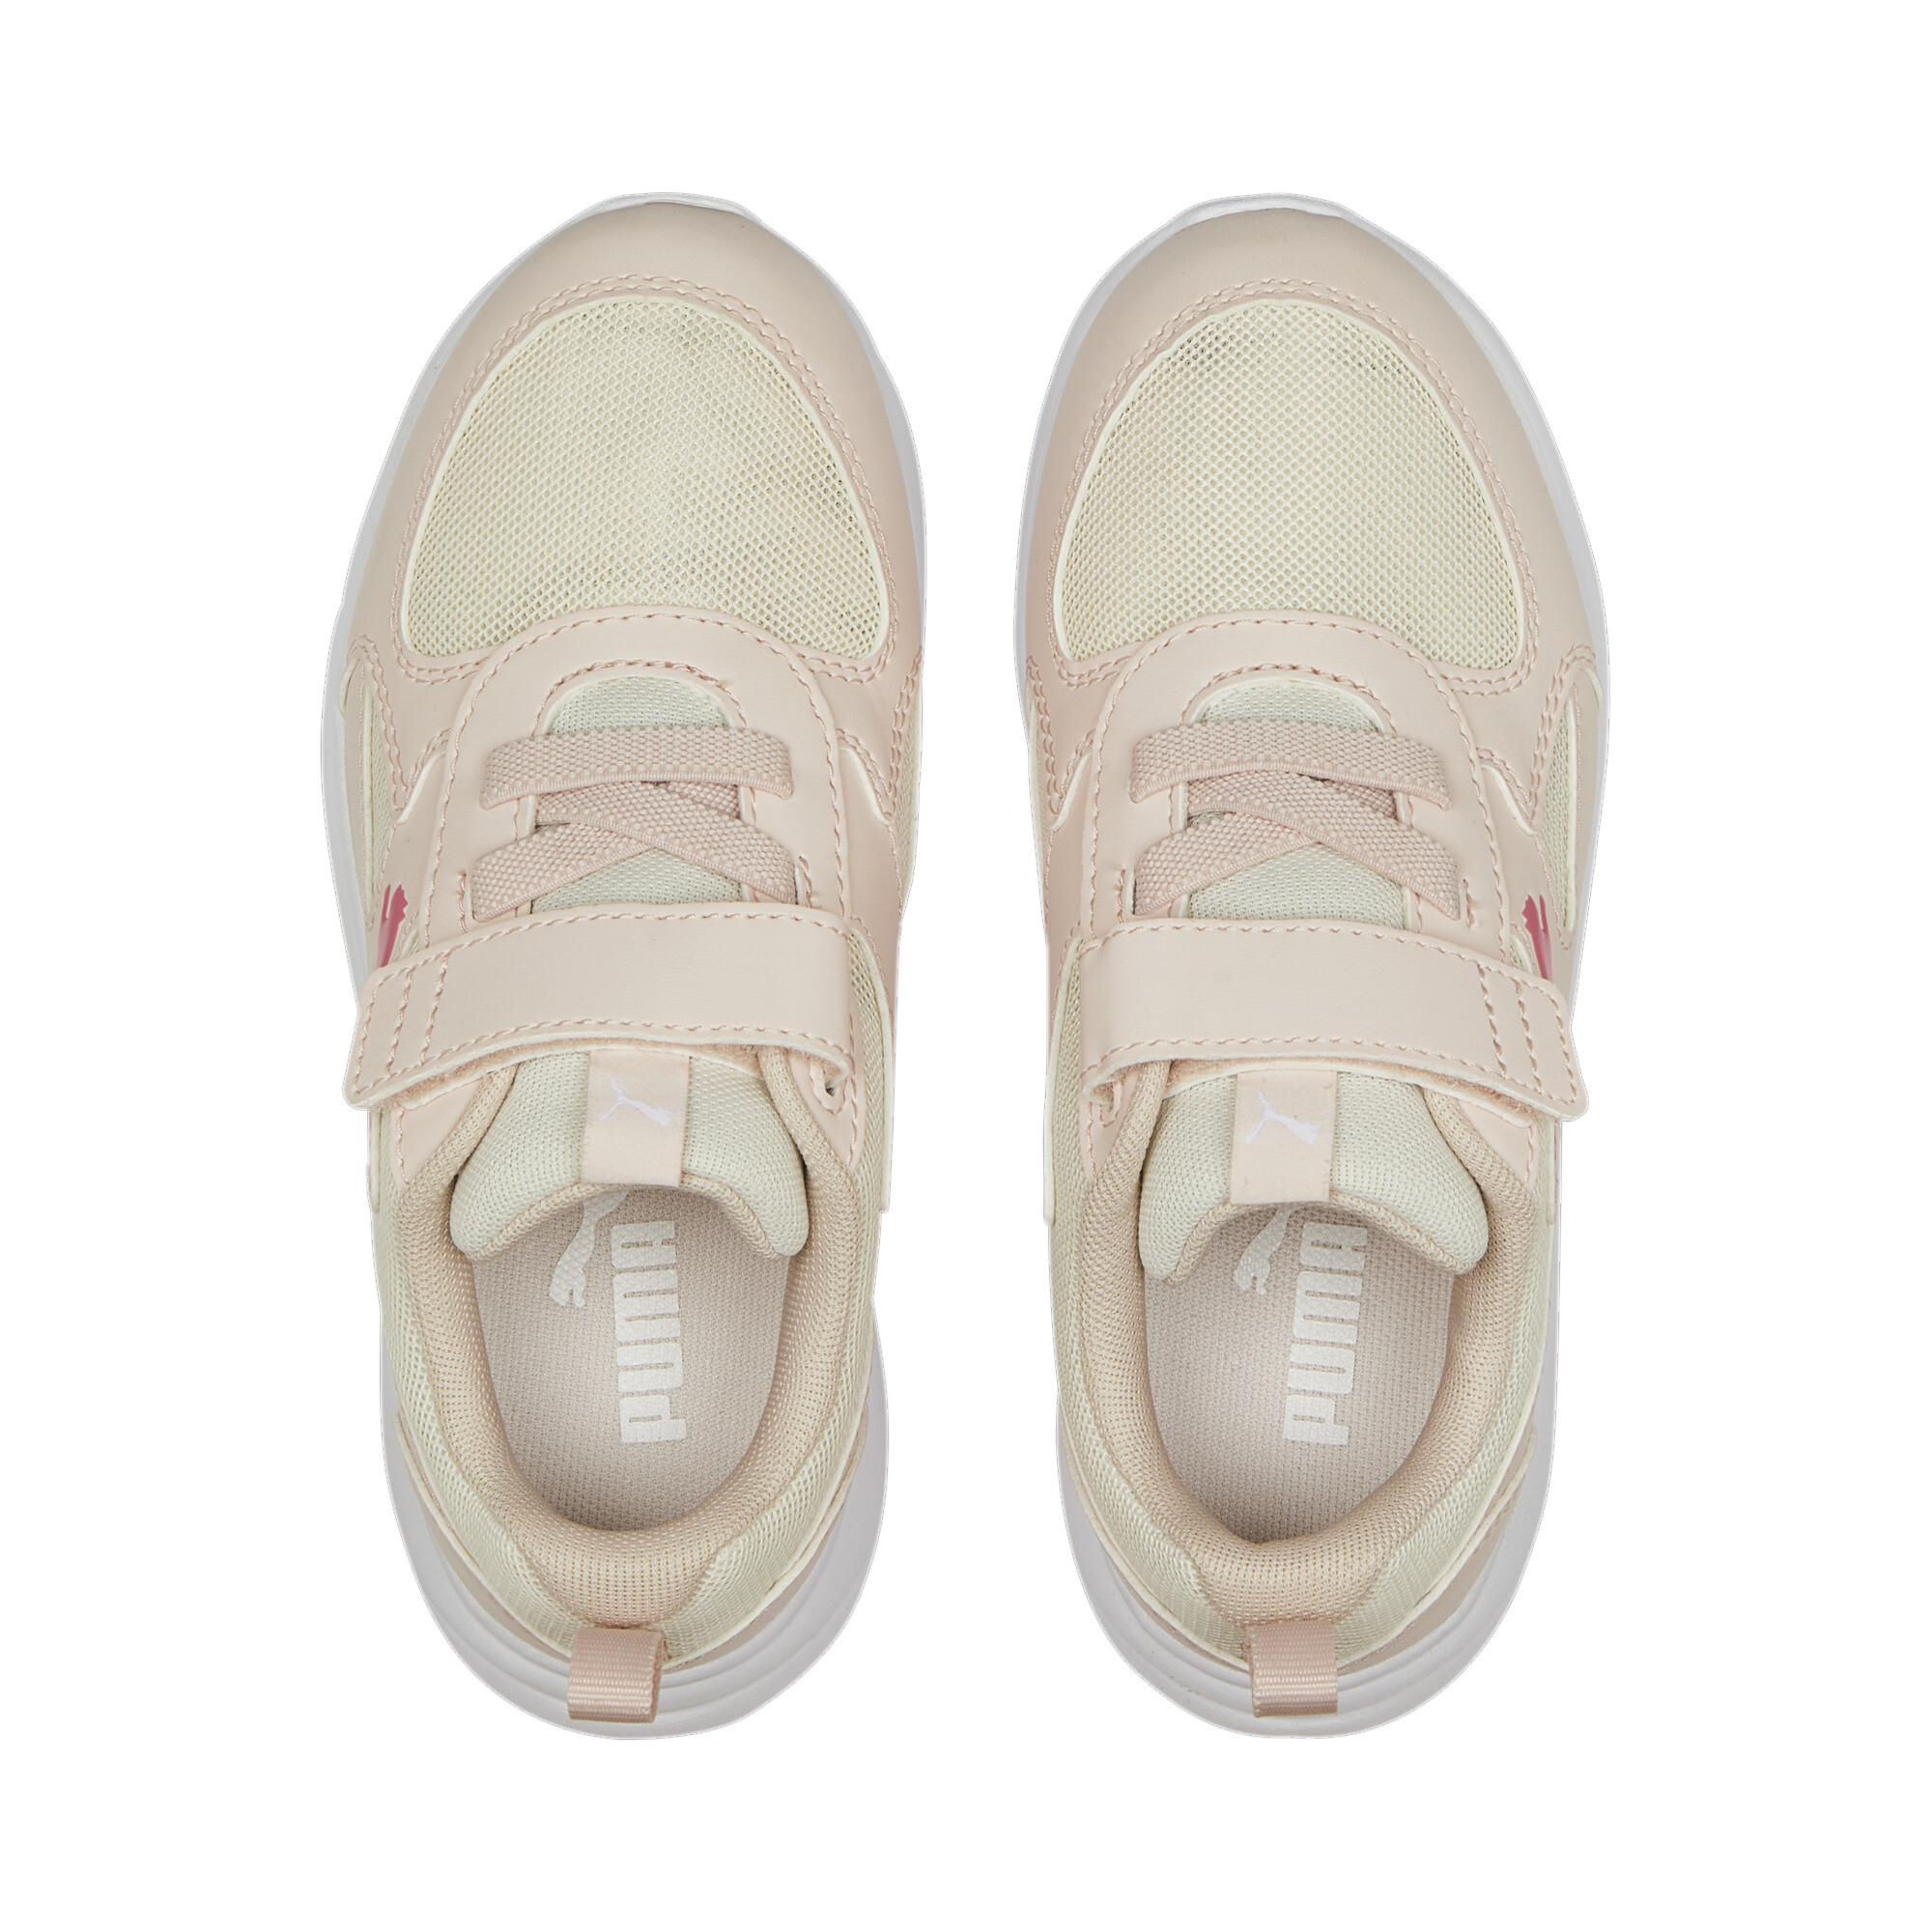 Kids' PUMA Fun Racer Sneakers In White/Pink, Size EU 33